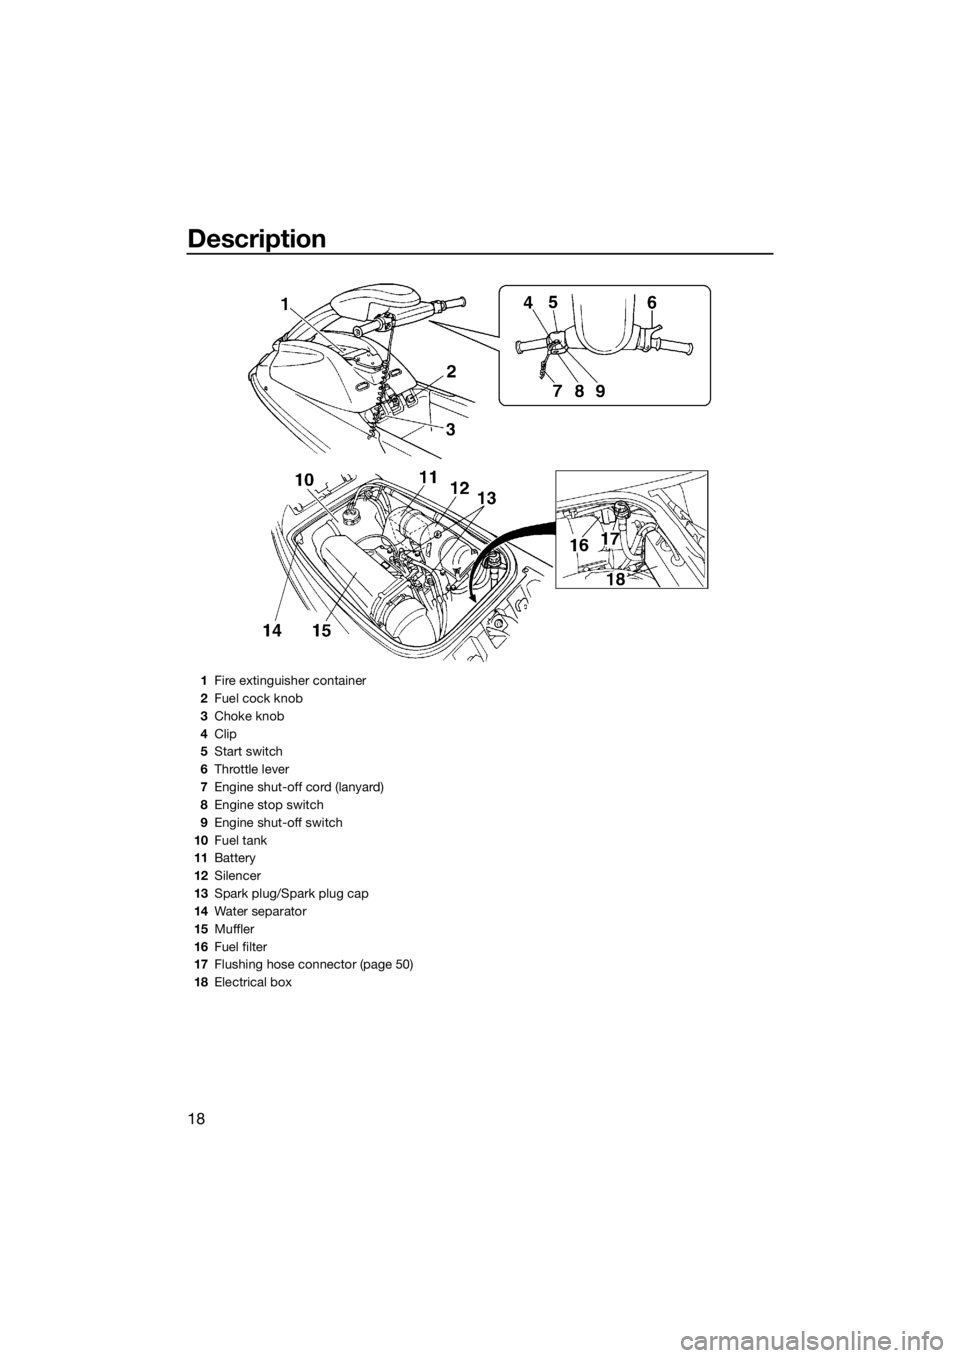 YAMAHA SUPERJET 2018  Owners Manual Description
18
1Fire extinguisher container
2Fuel cock knob
3Choke knob
4Clip
5Start switch
6Throttle lever
7Engine shut-off cord (lanyard)
8Engine stop switch
9Engine shut-off switch
10Fuel tank
11Ba